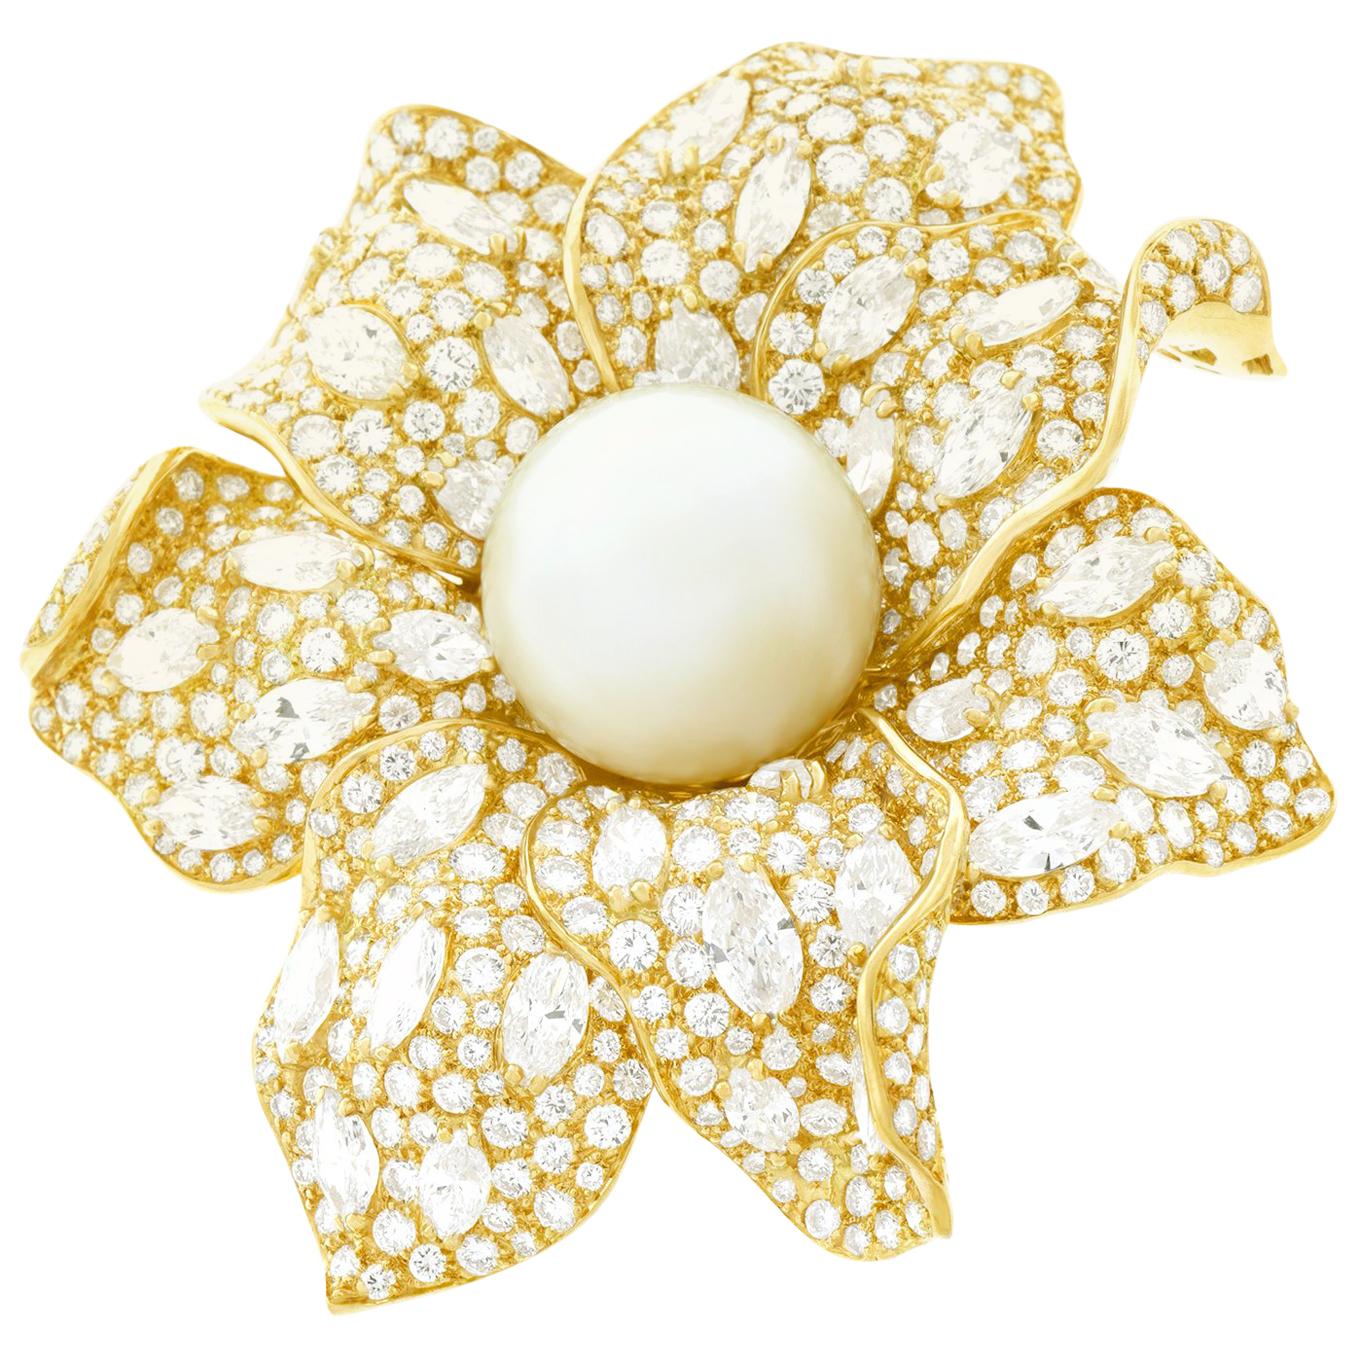 Magnifique broche fleur en or sertie de perles et de diamants